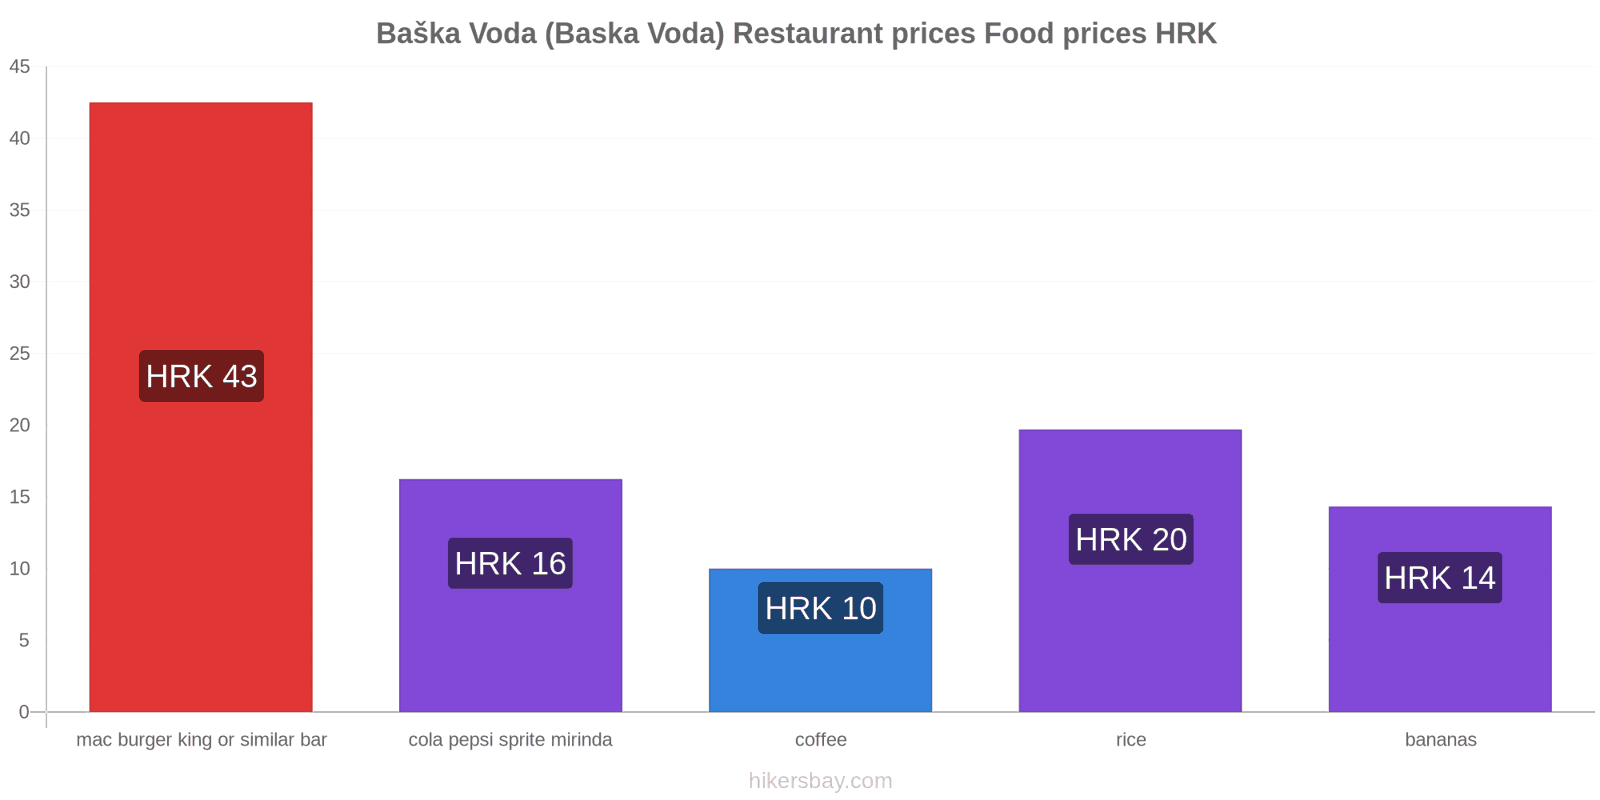 Baška Voda (Baska Voda) price changes hikersbay.com